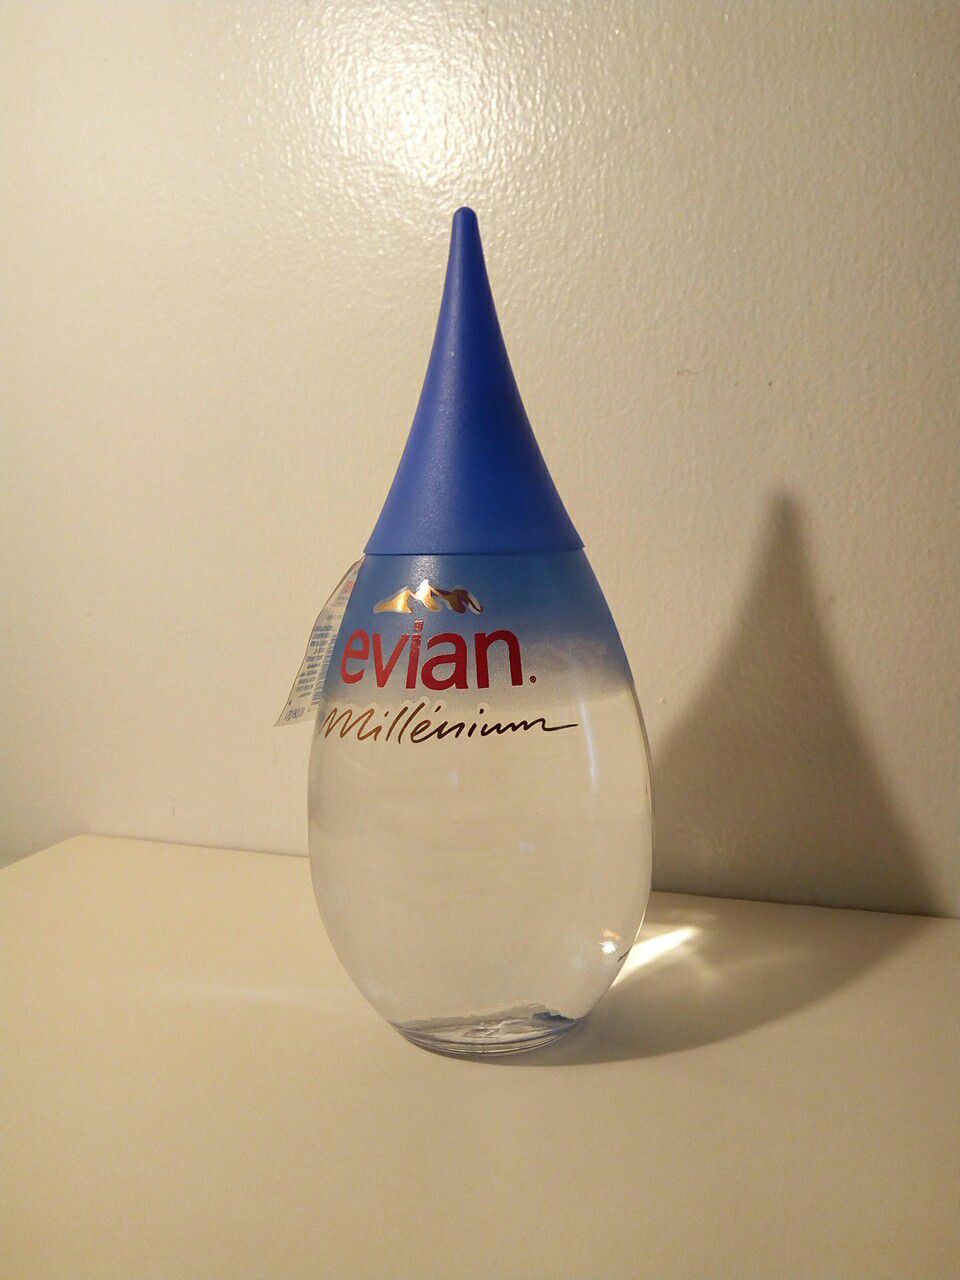 Evian Millenium limited edition